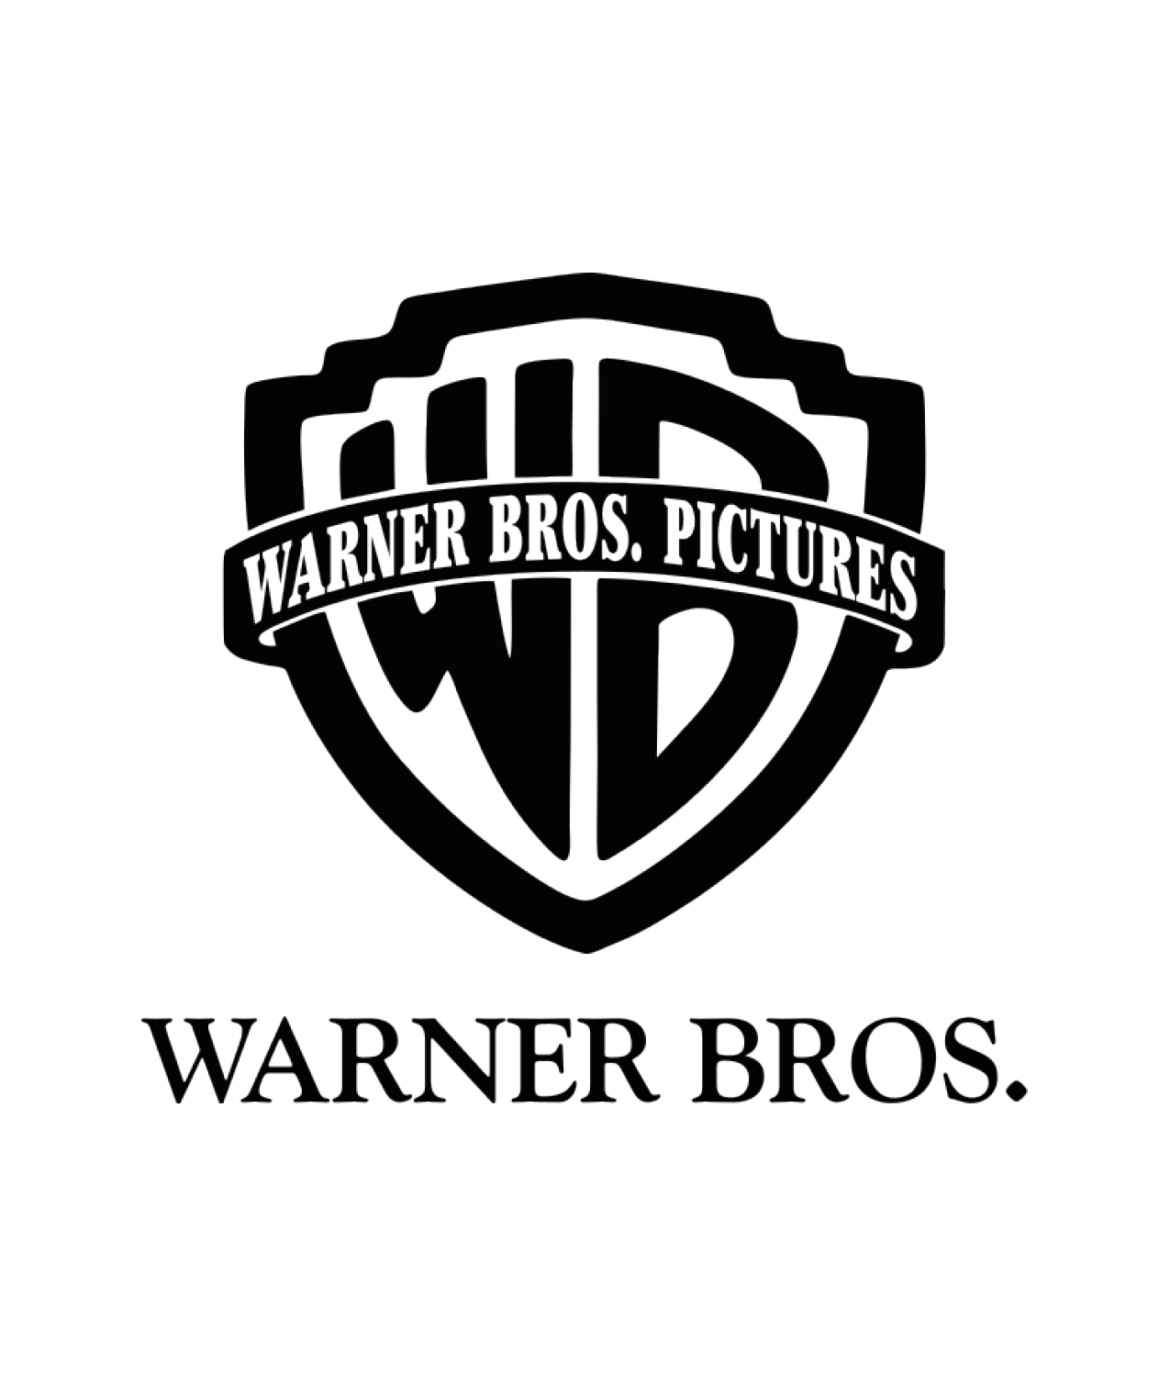 Варнер. Эмблема WB ворнер бразерс. Варнер БРОС логотип. Кинокомпания Warner Bros. Уорнер бразерс Пикчерз.